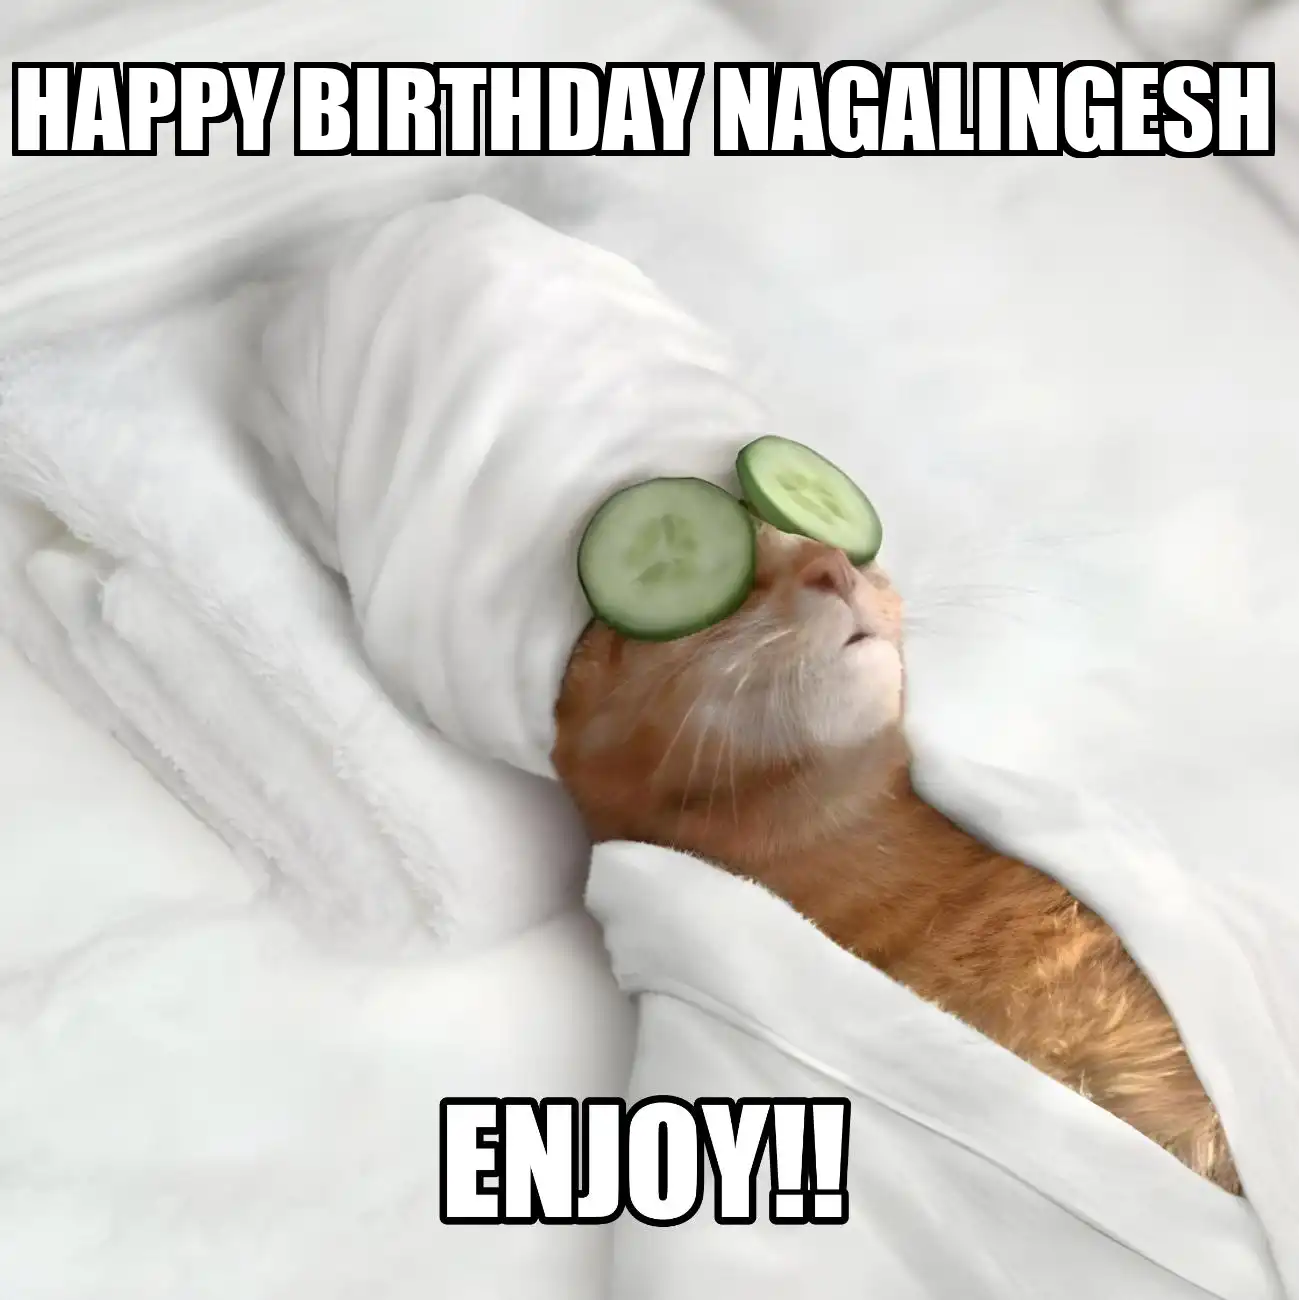 Happy Birthday Nagalingesh Enjoy Cat Meme